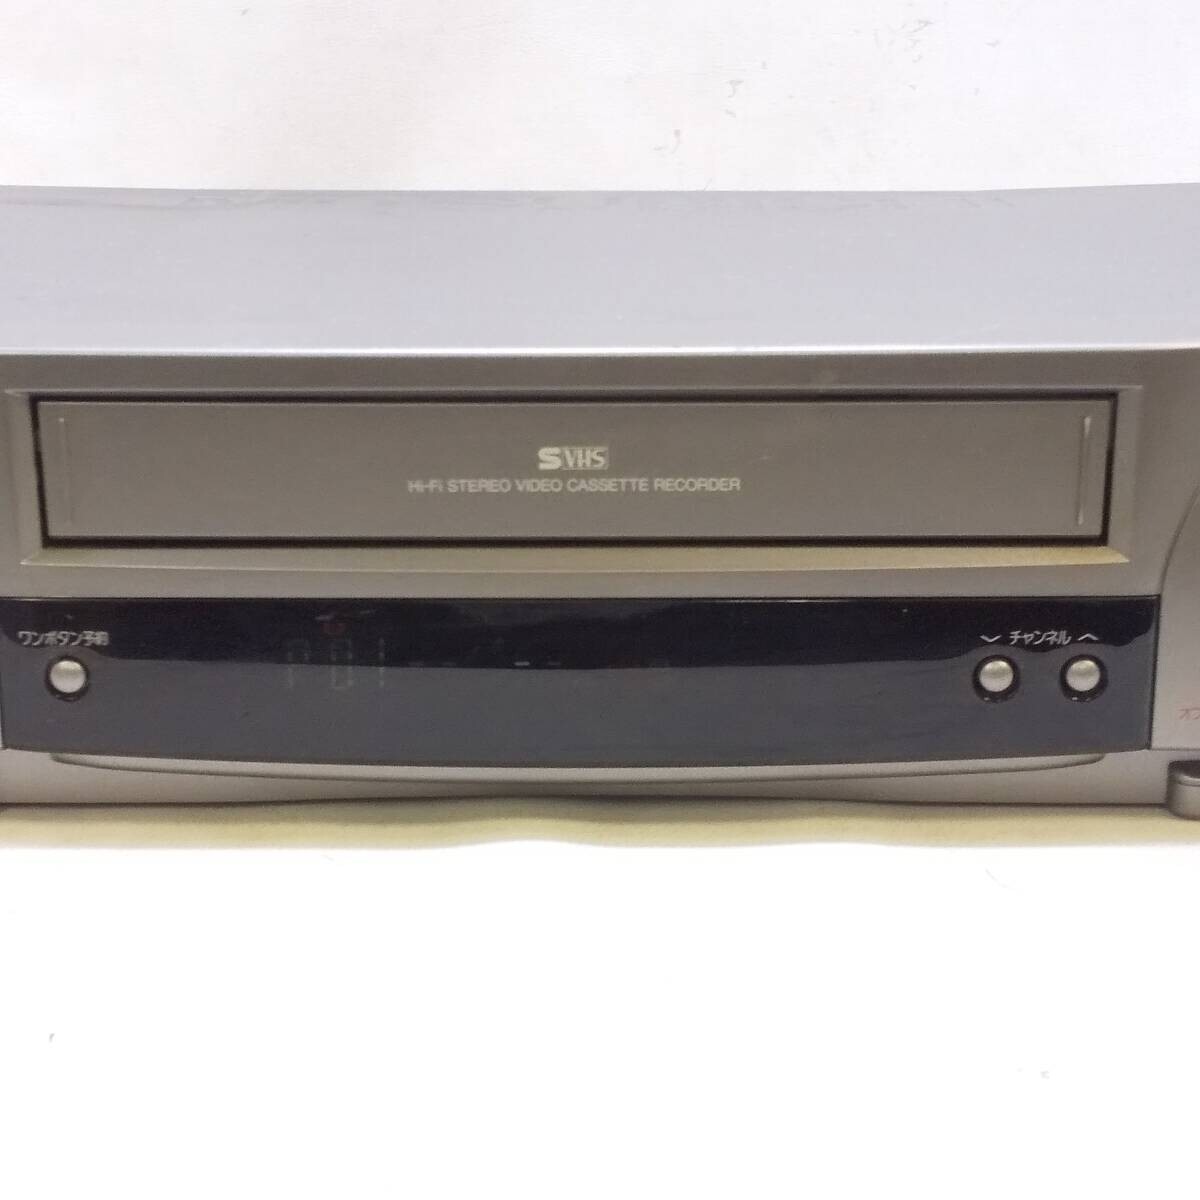 ◆MITSUBISHI 三菱 S-VHS ビデオデッキ HV-S730 本体のみ 1997年製 再生確認のみ 現状品◆R2247の画像3